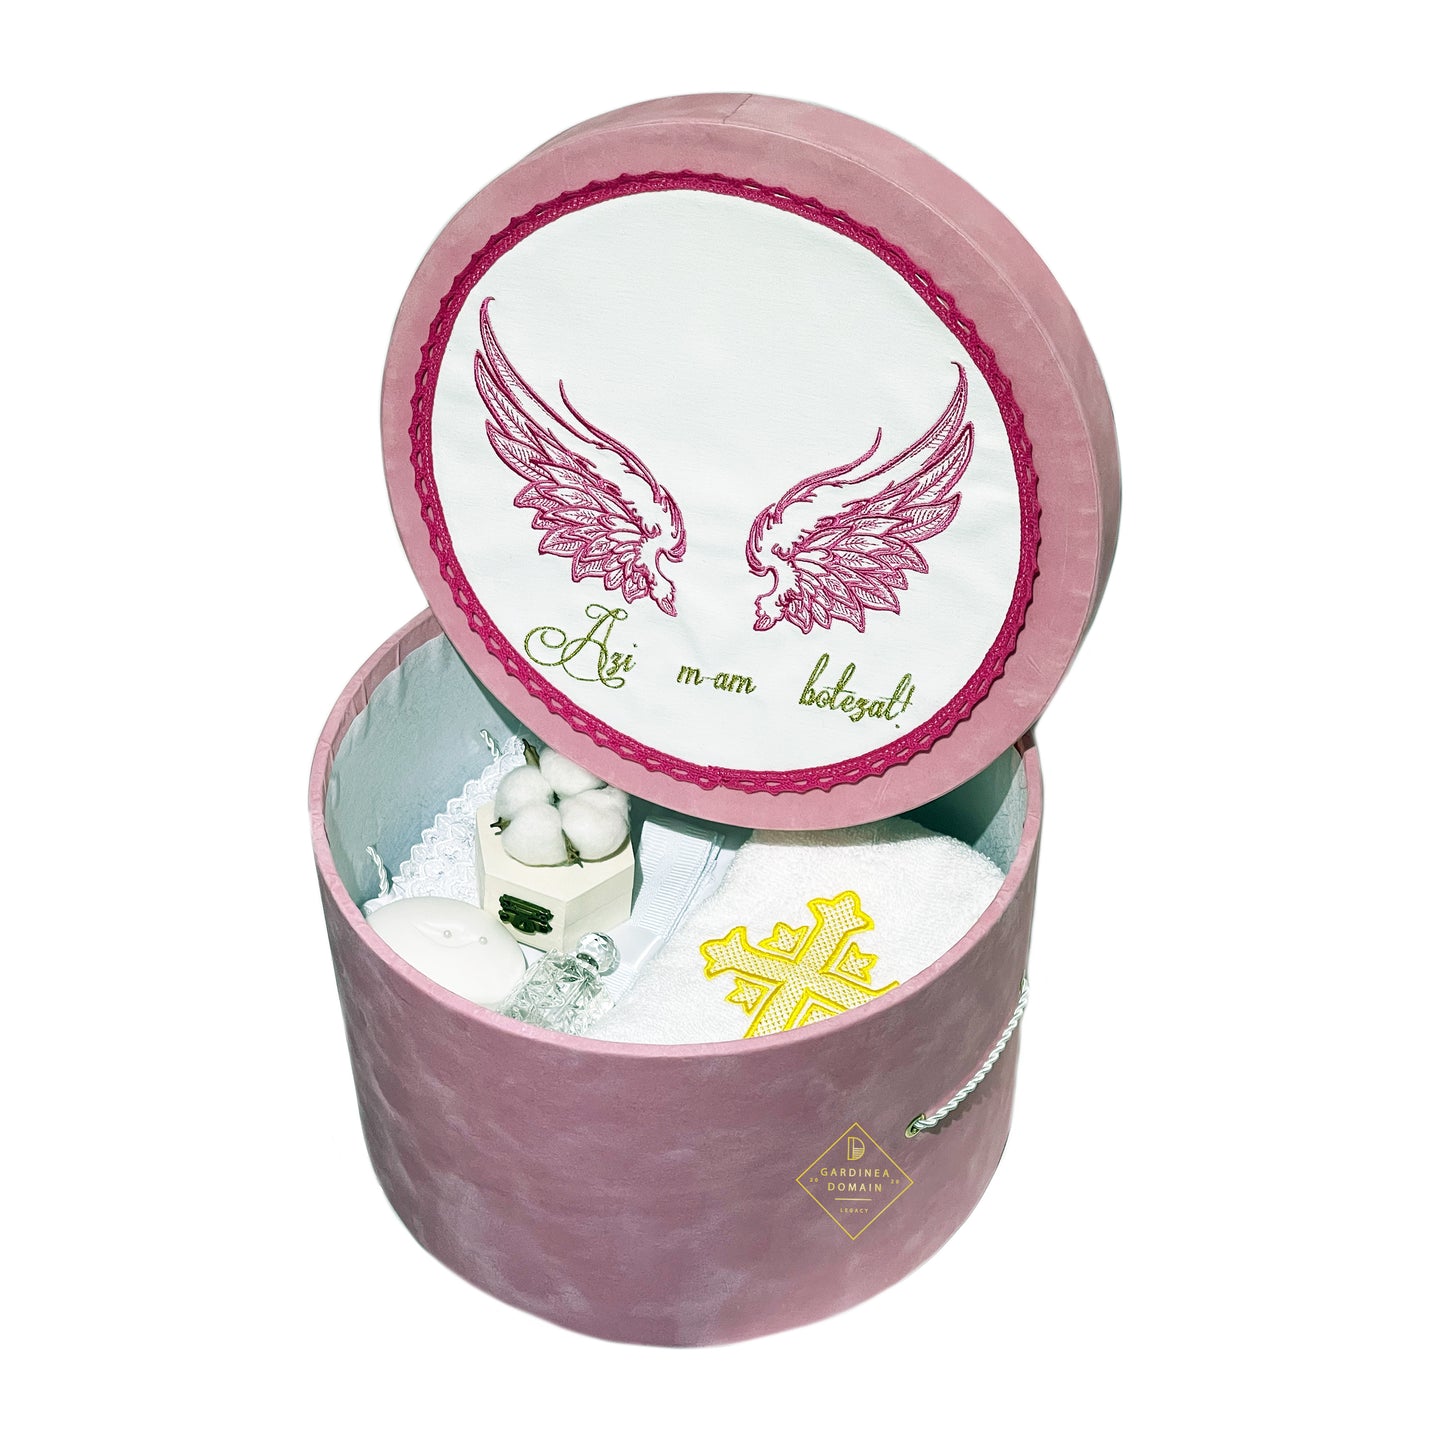 Trusou elegant botez Gardinea Domain® 10 piese, cutie trusou din catifea roz si capac personalizat brodat cu mesajul "Azi m-am botezat!", decor dantela